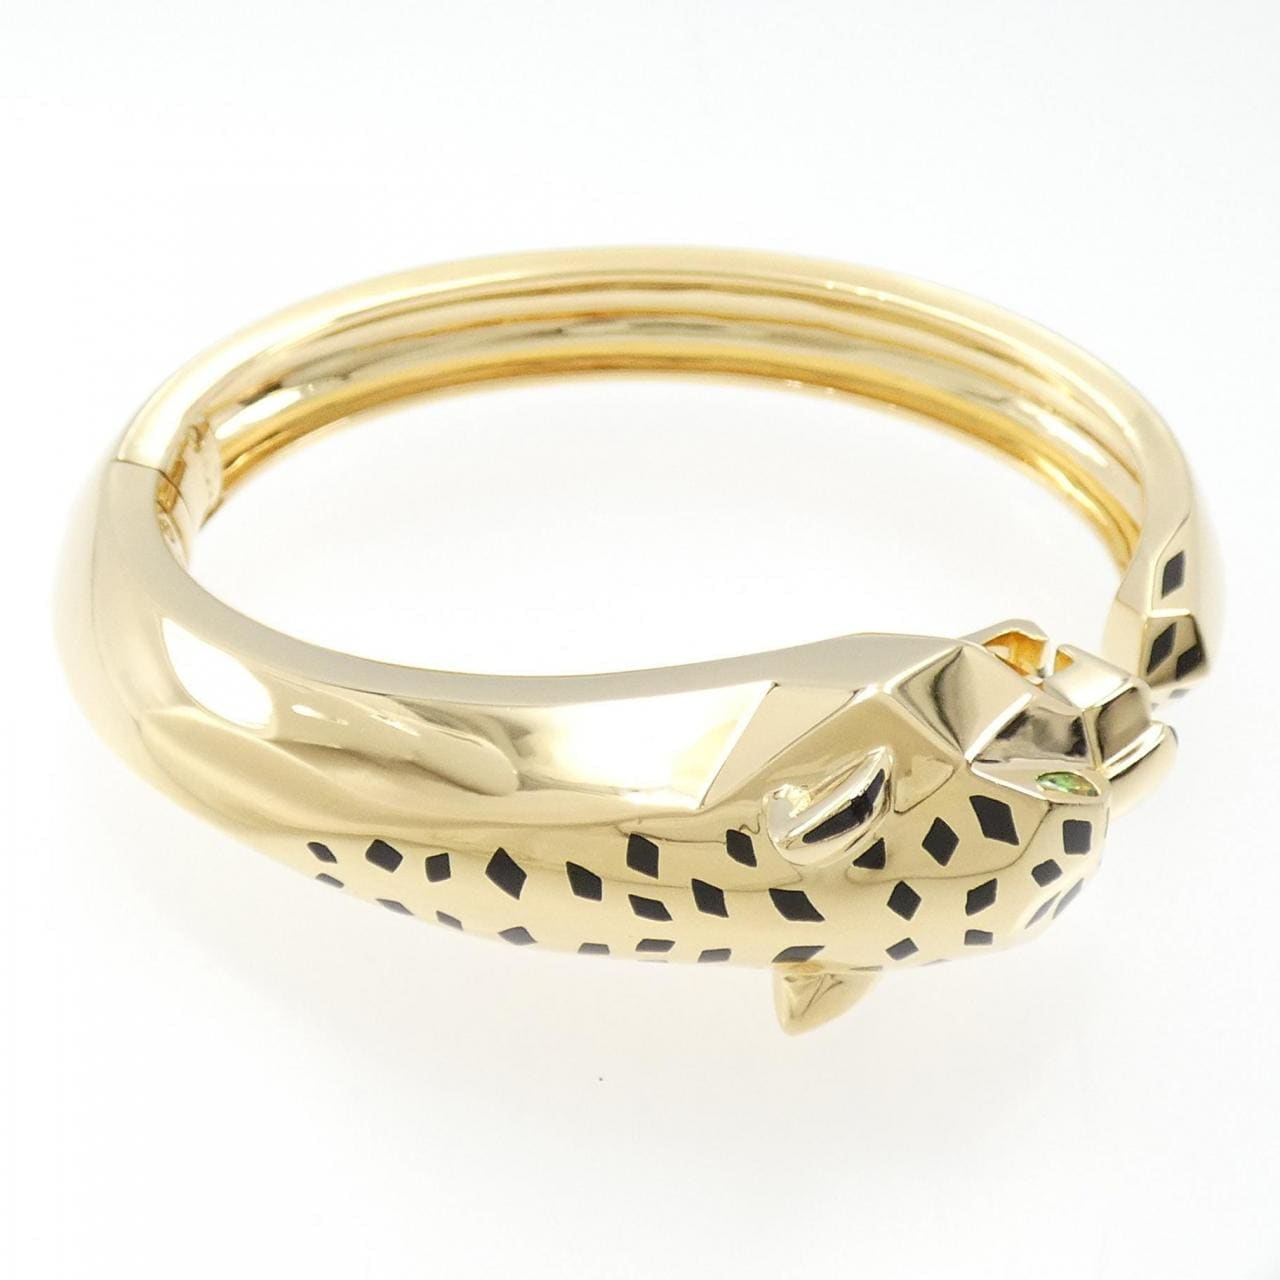 CRN6036700 - Panthère de Cartier bracelet - Yellow gold, lacquer, diamond,  tsavorite garnet, onyx - Cartier